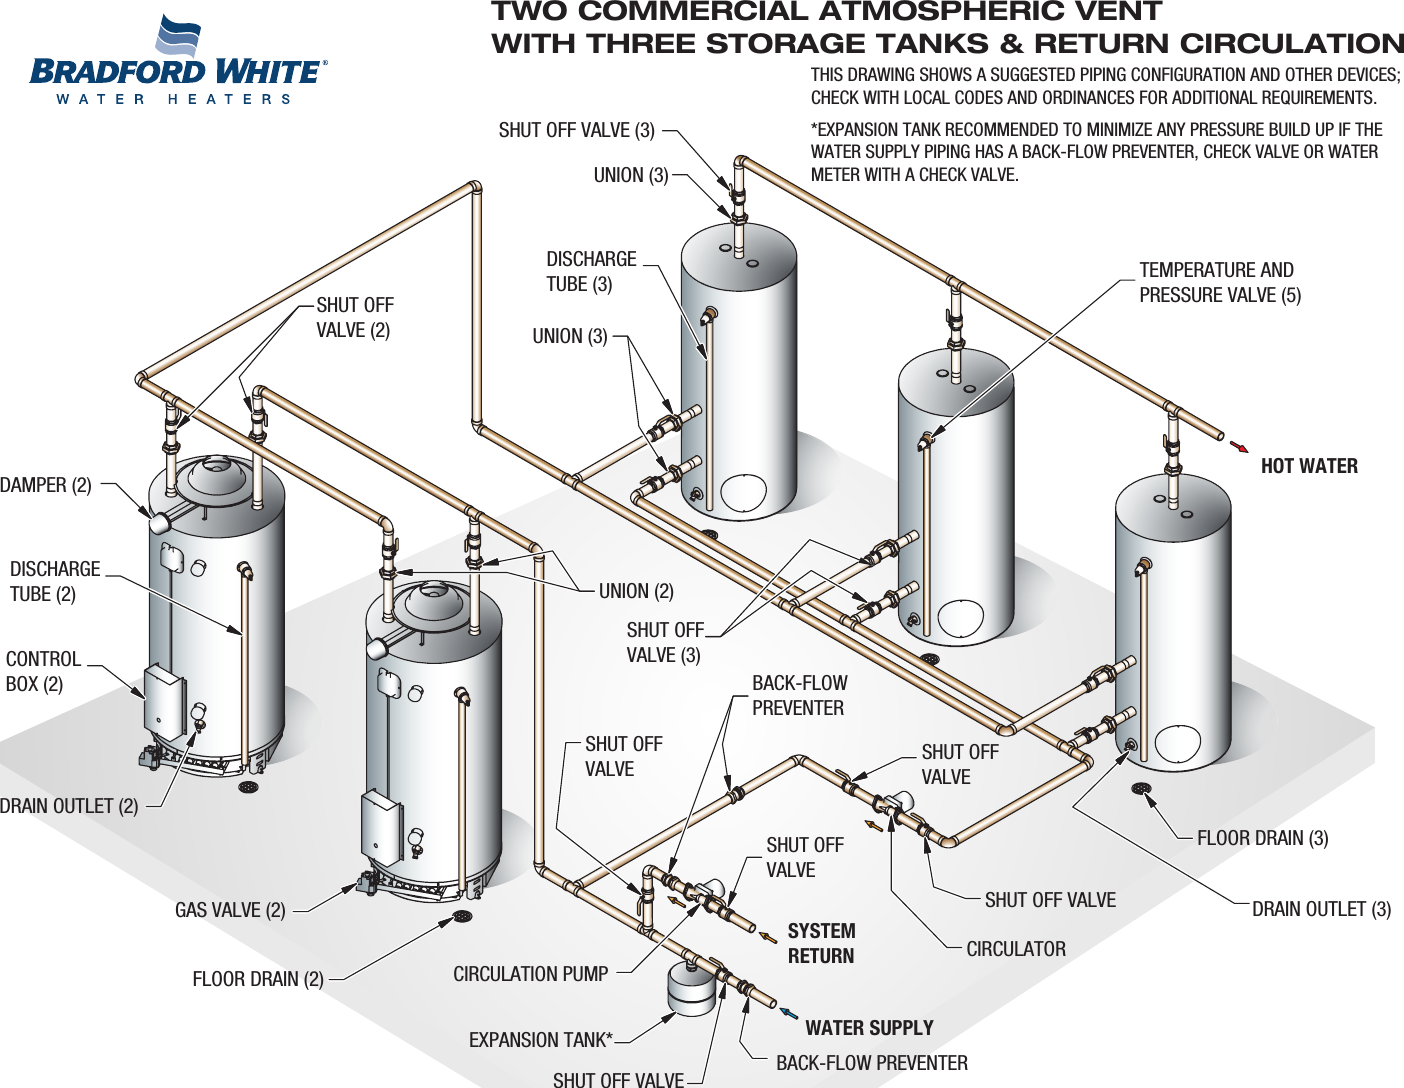 Hot Water Storage Tank Piping Diagram